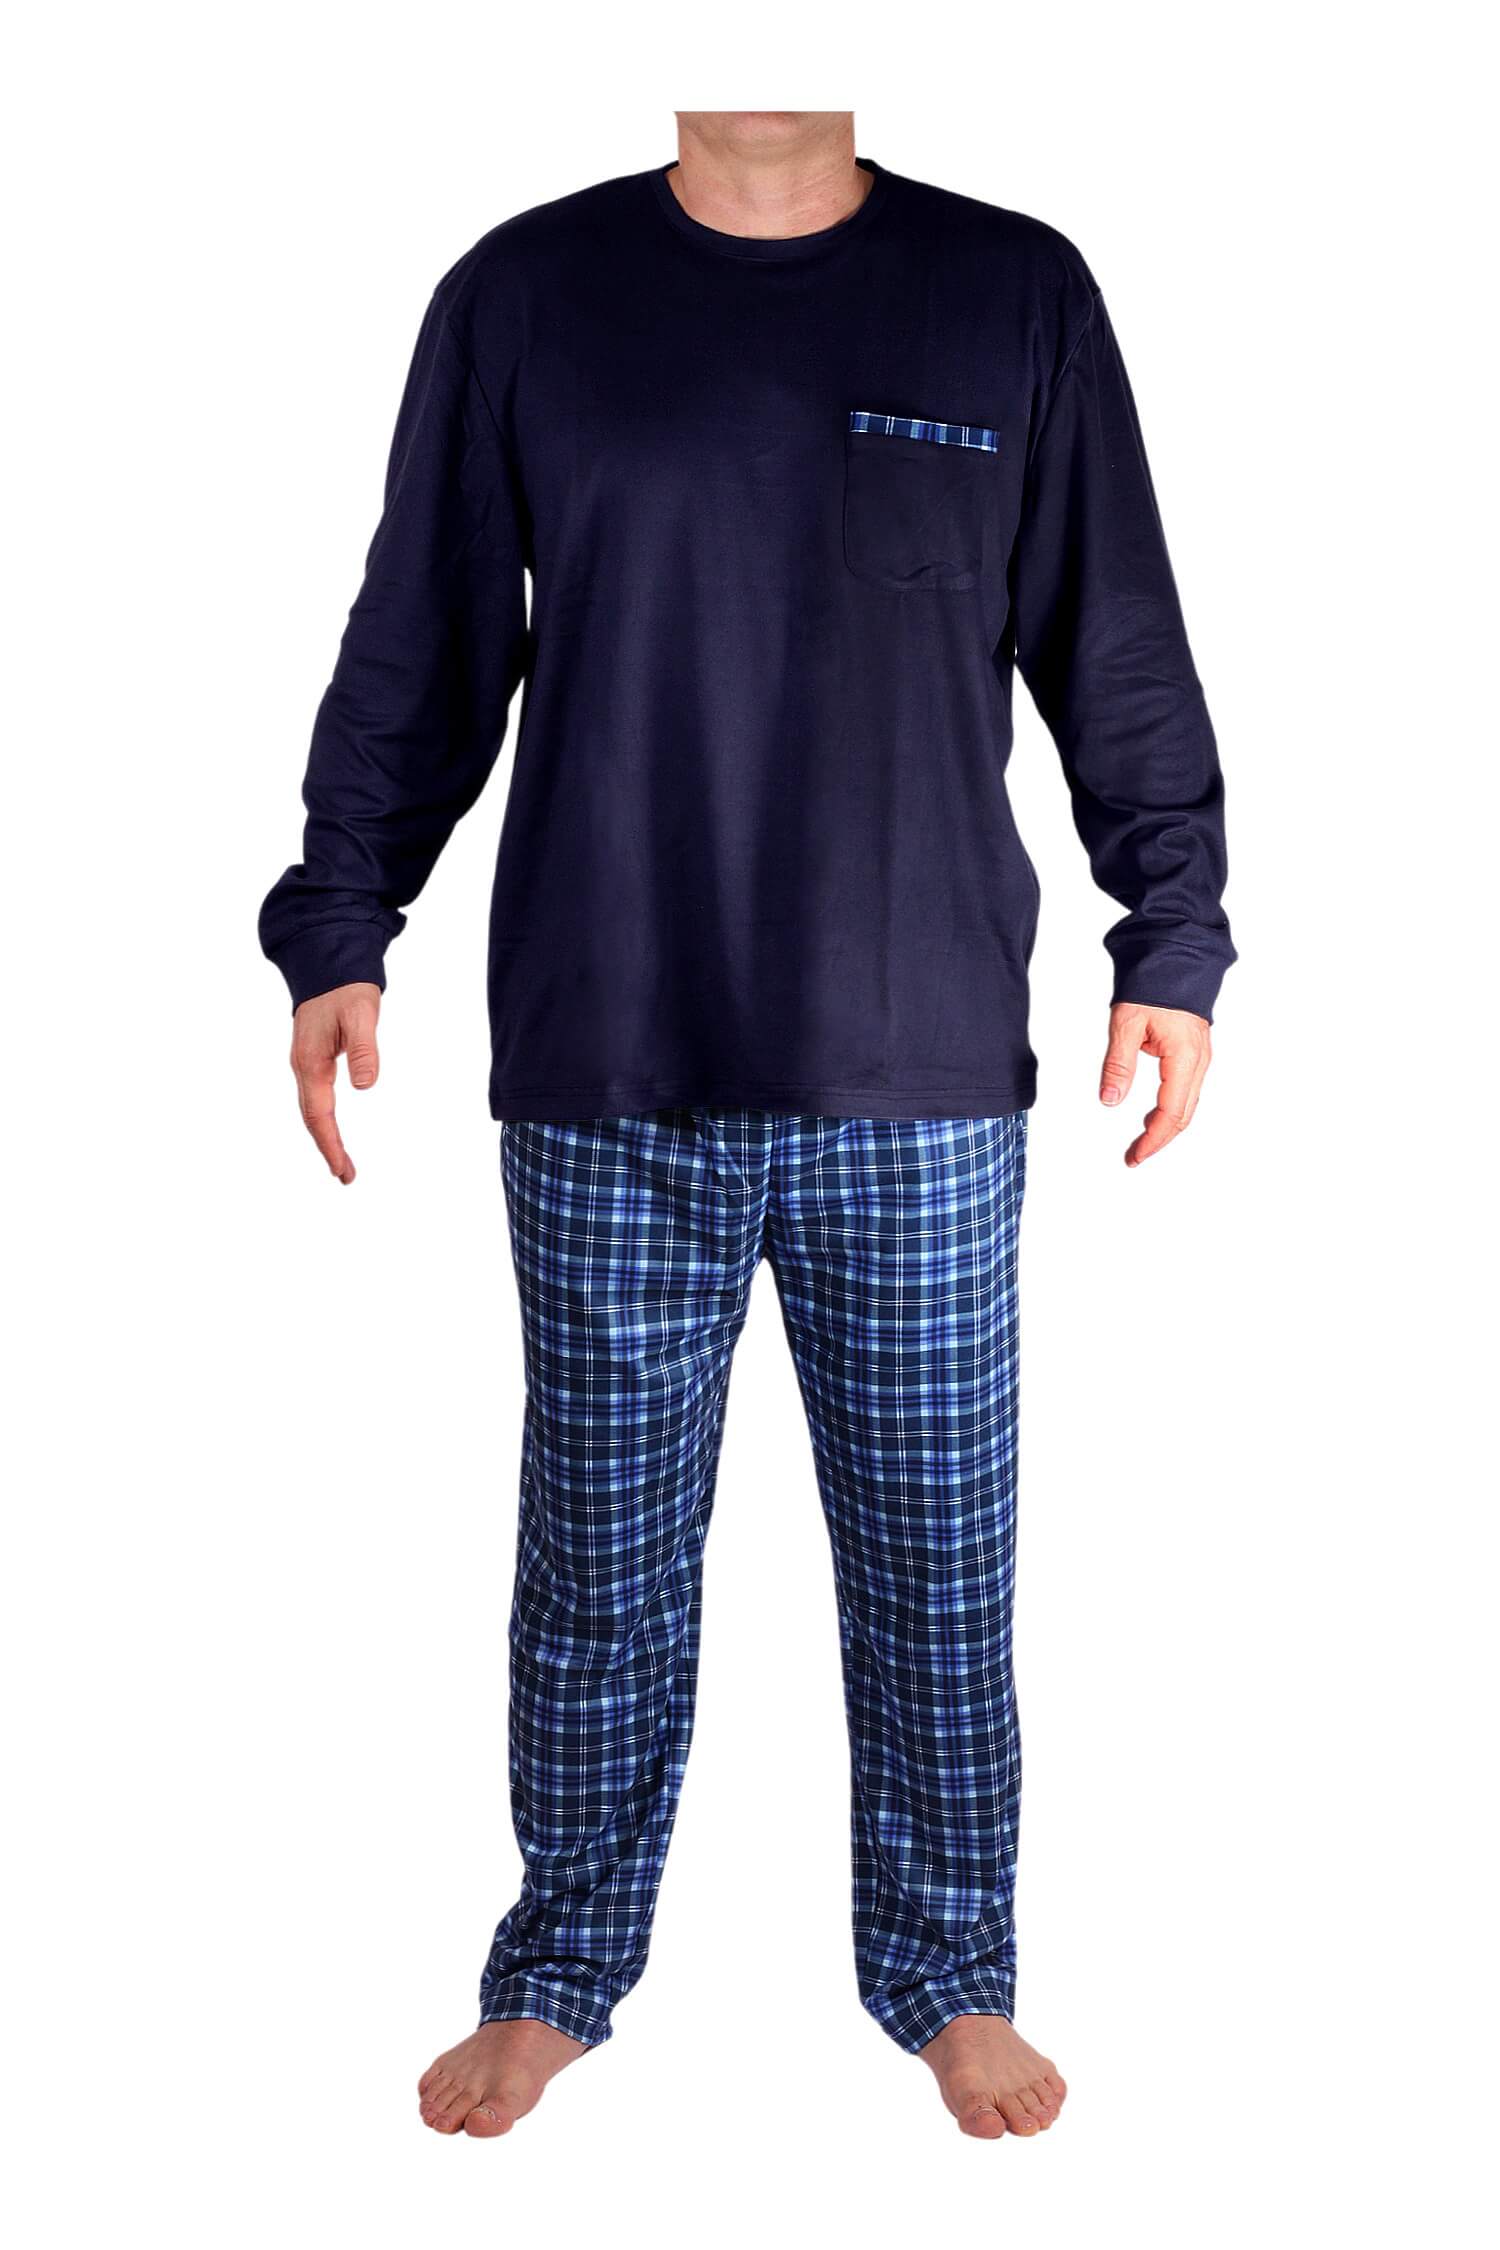 Zdenda Lux pánské pyžamo s flísem 4XL tmavě modrá